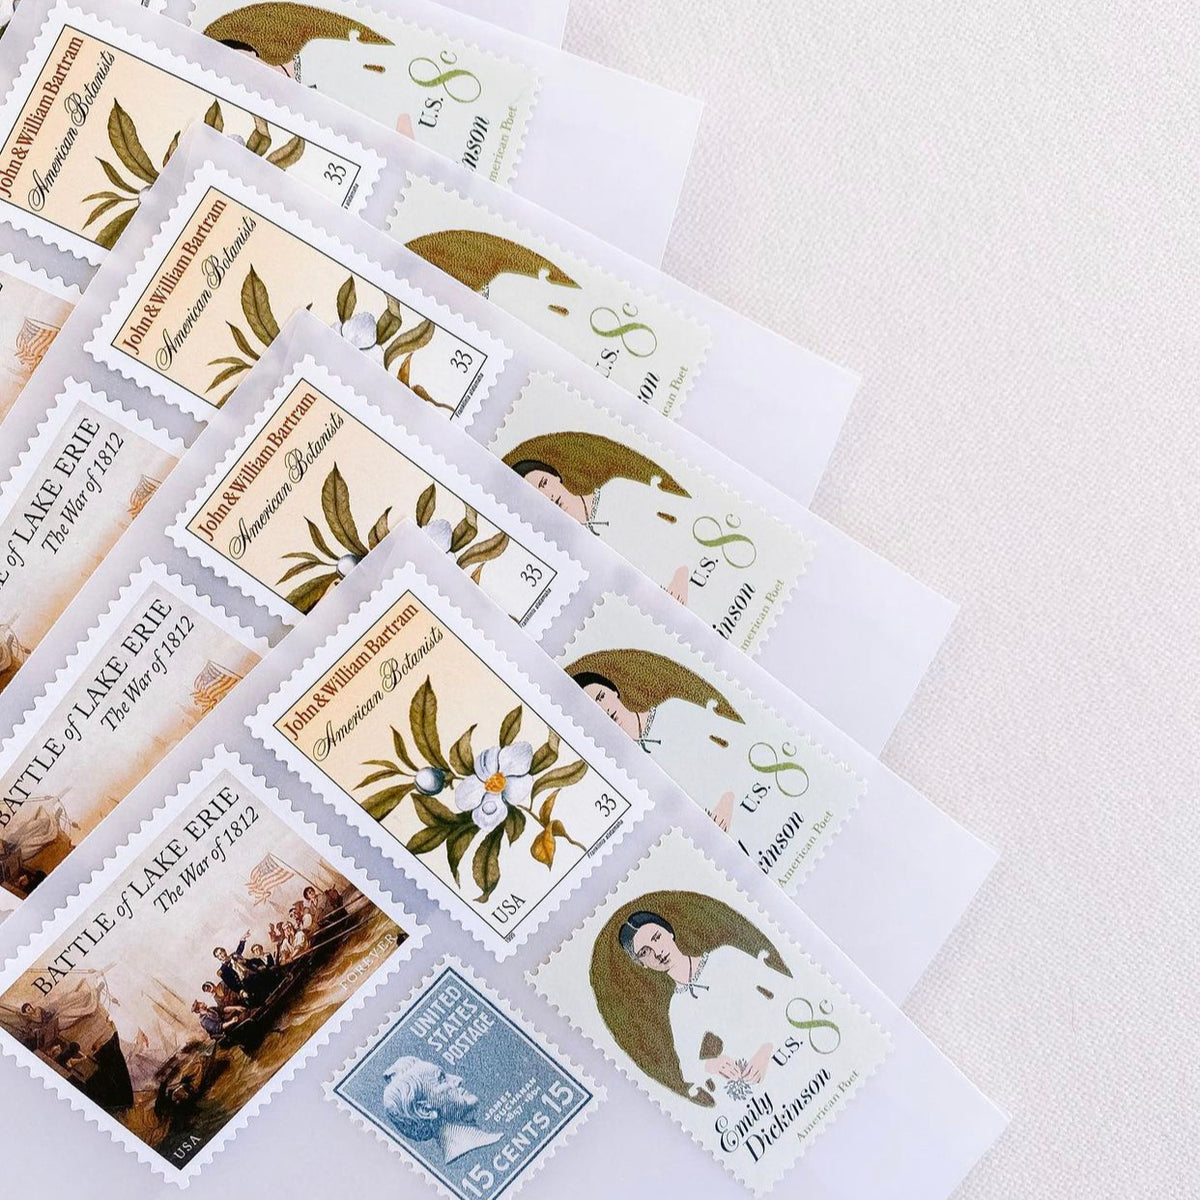 TEN 13c VIRGINIA State Flag stamp | Vintage Unused US Postage Stamps |  Southern Bride | Boho Wedding | Williamsburg | Stamps for mailing